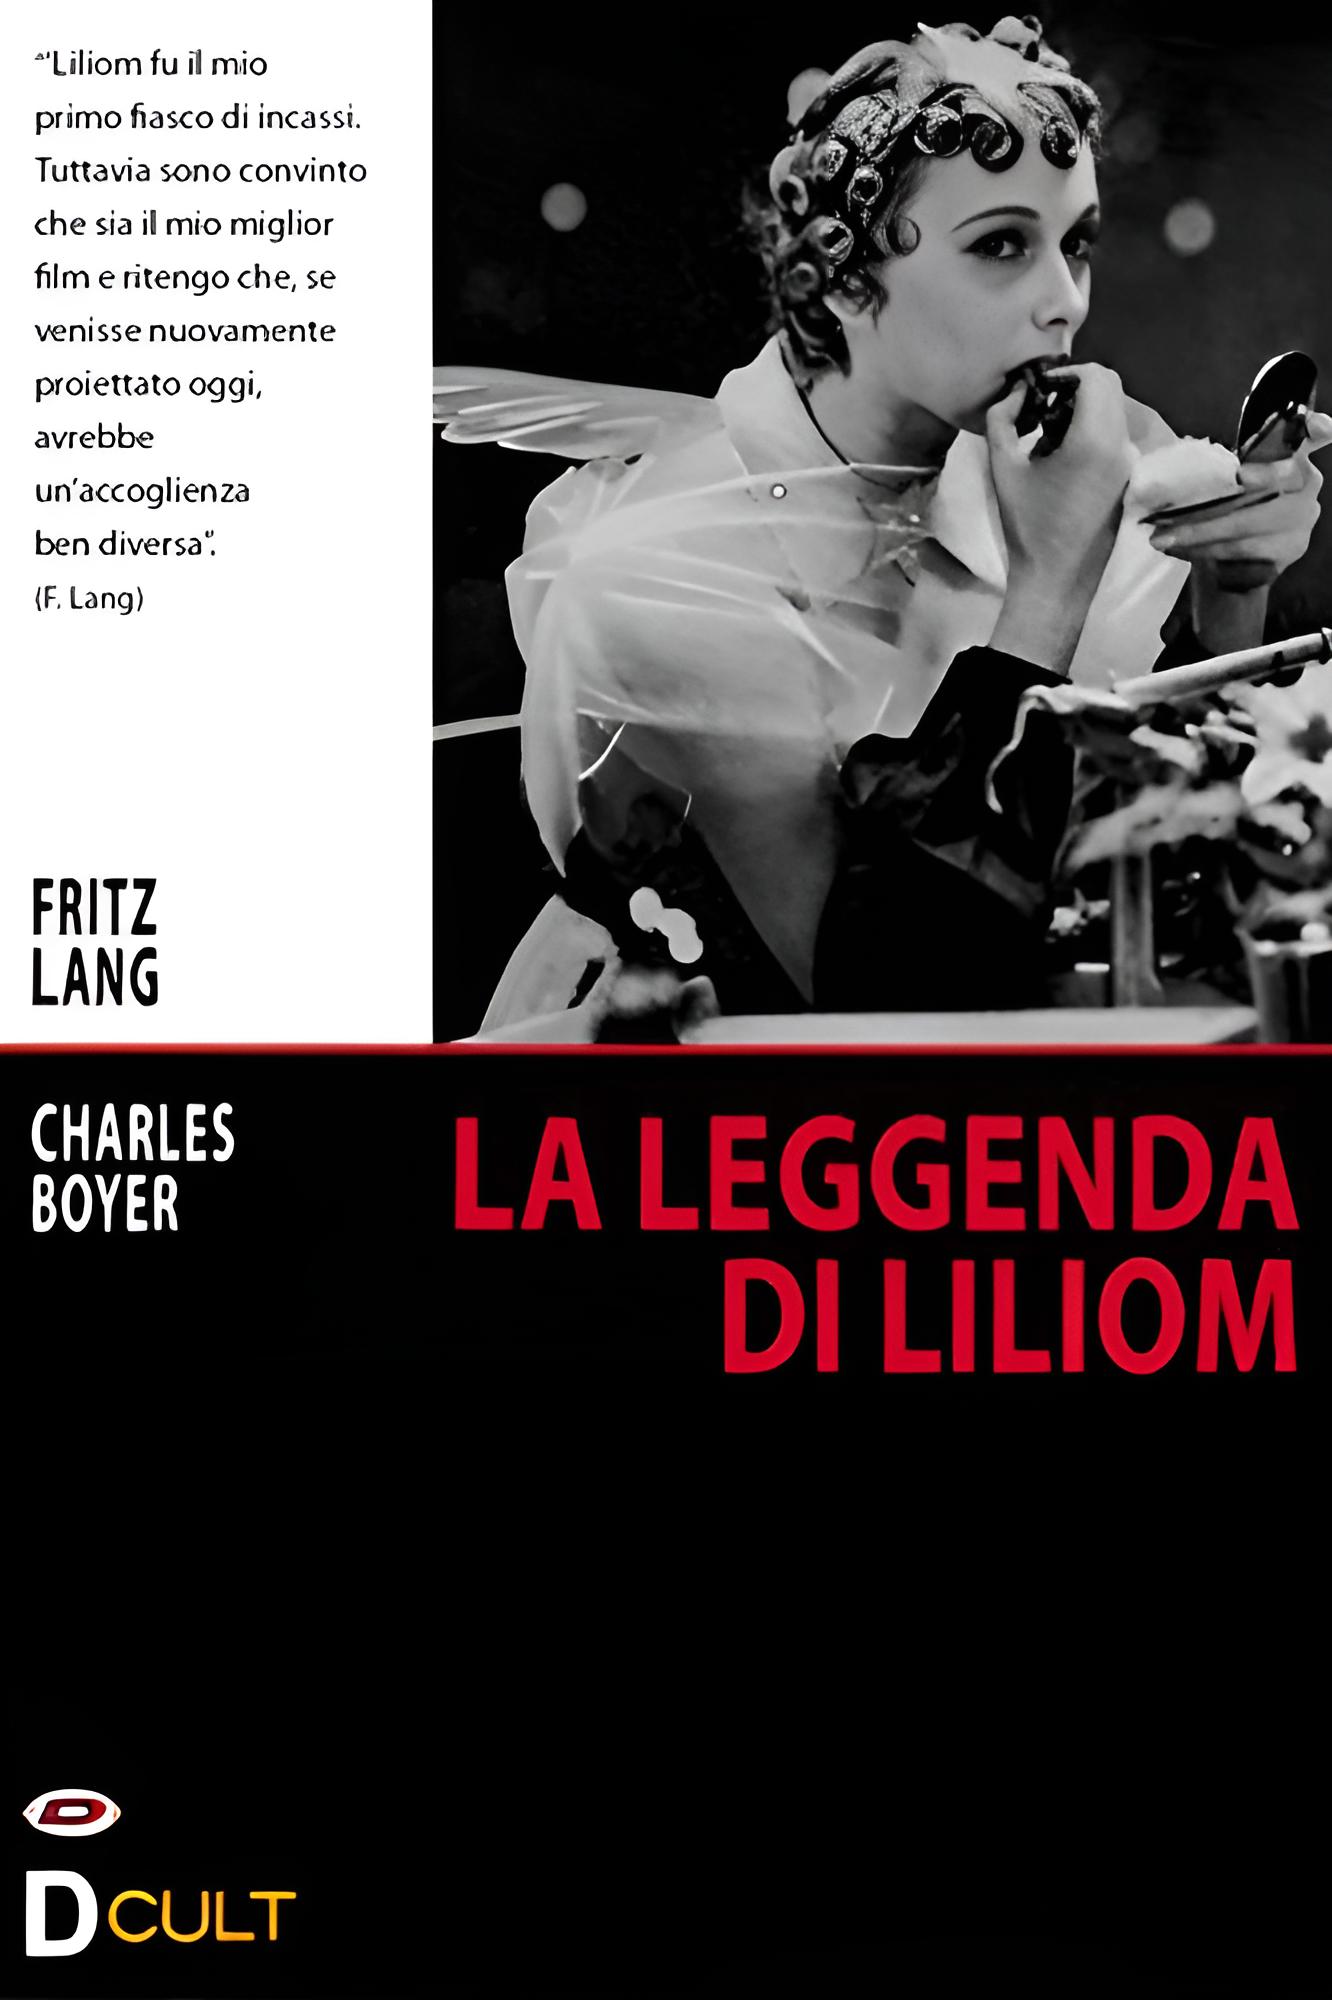 La leggenda di Liliom [B/N] [Sub-ITA] (1934)